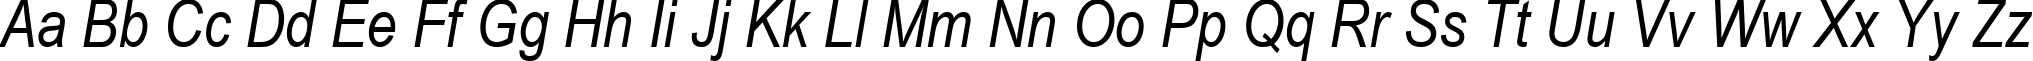 Пример написания английского алфавита шрифтом Ariac  Italic